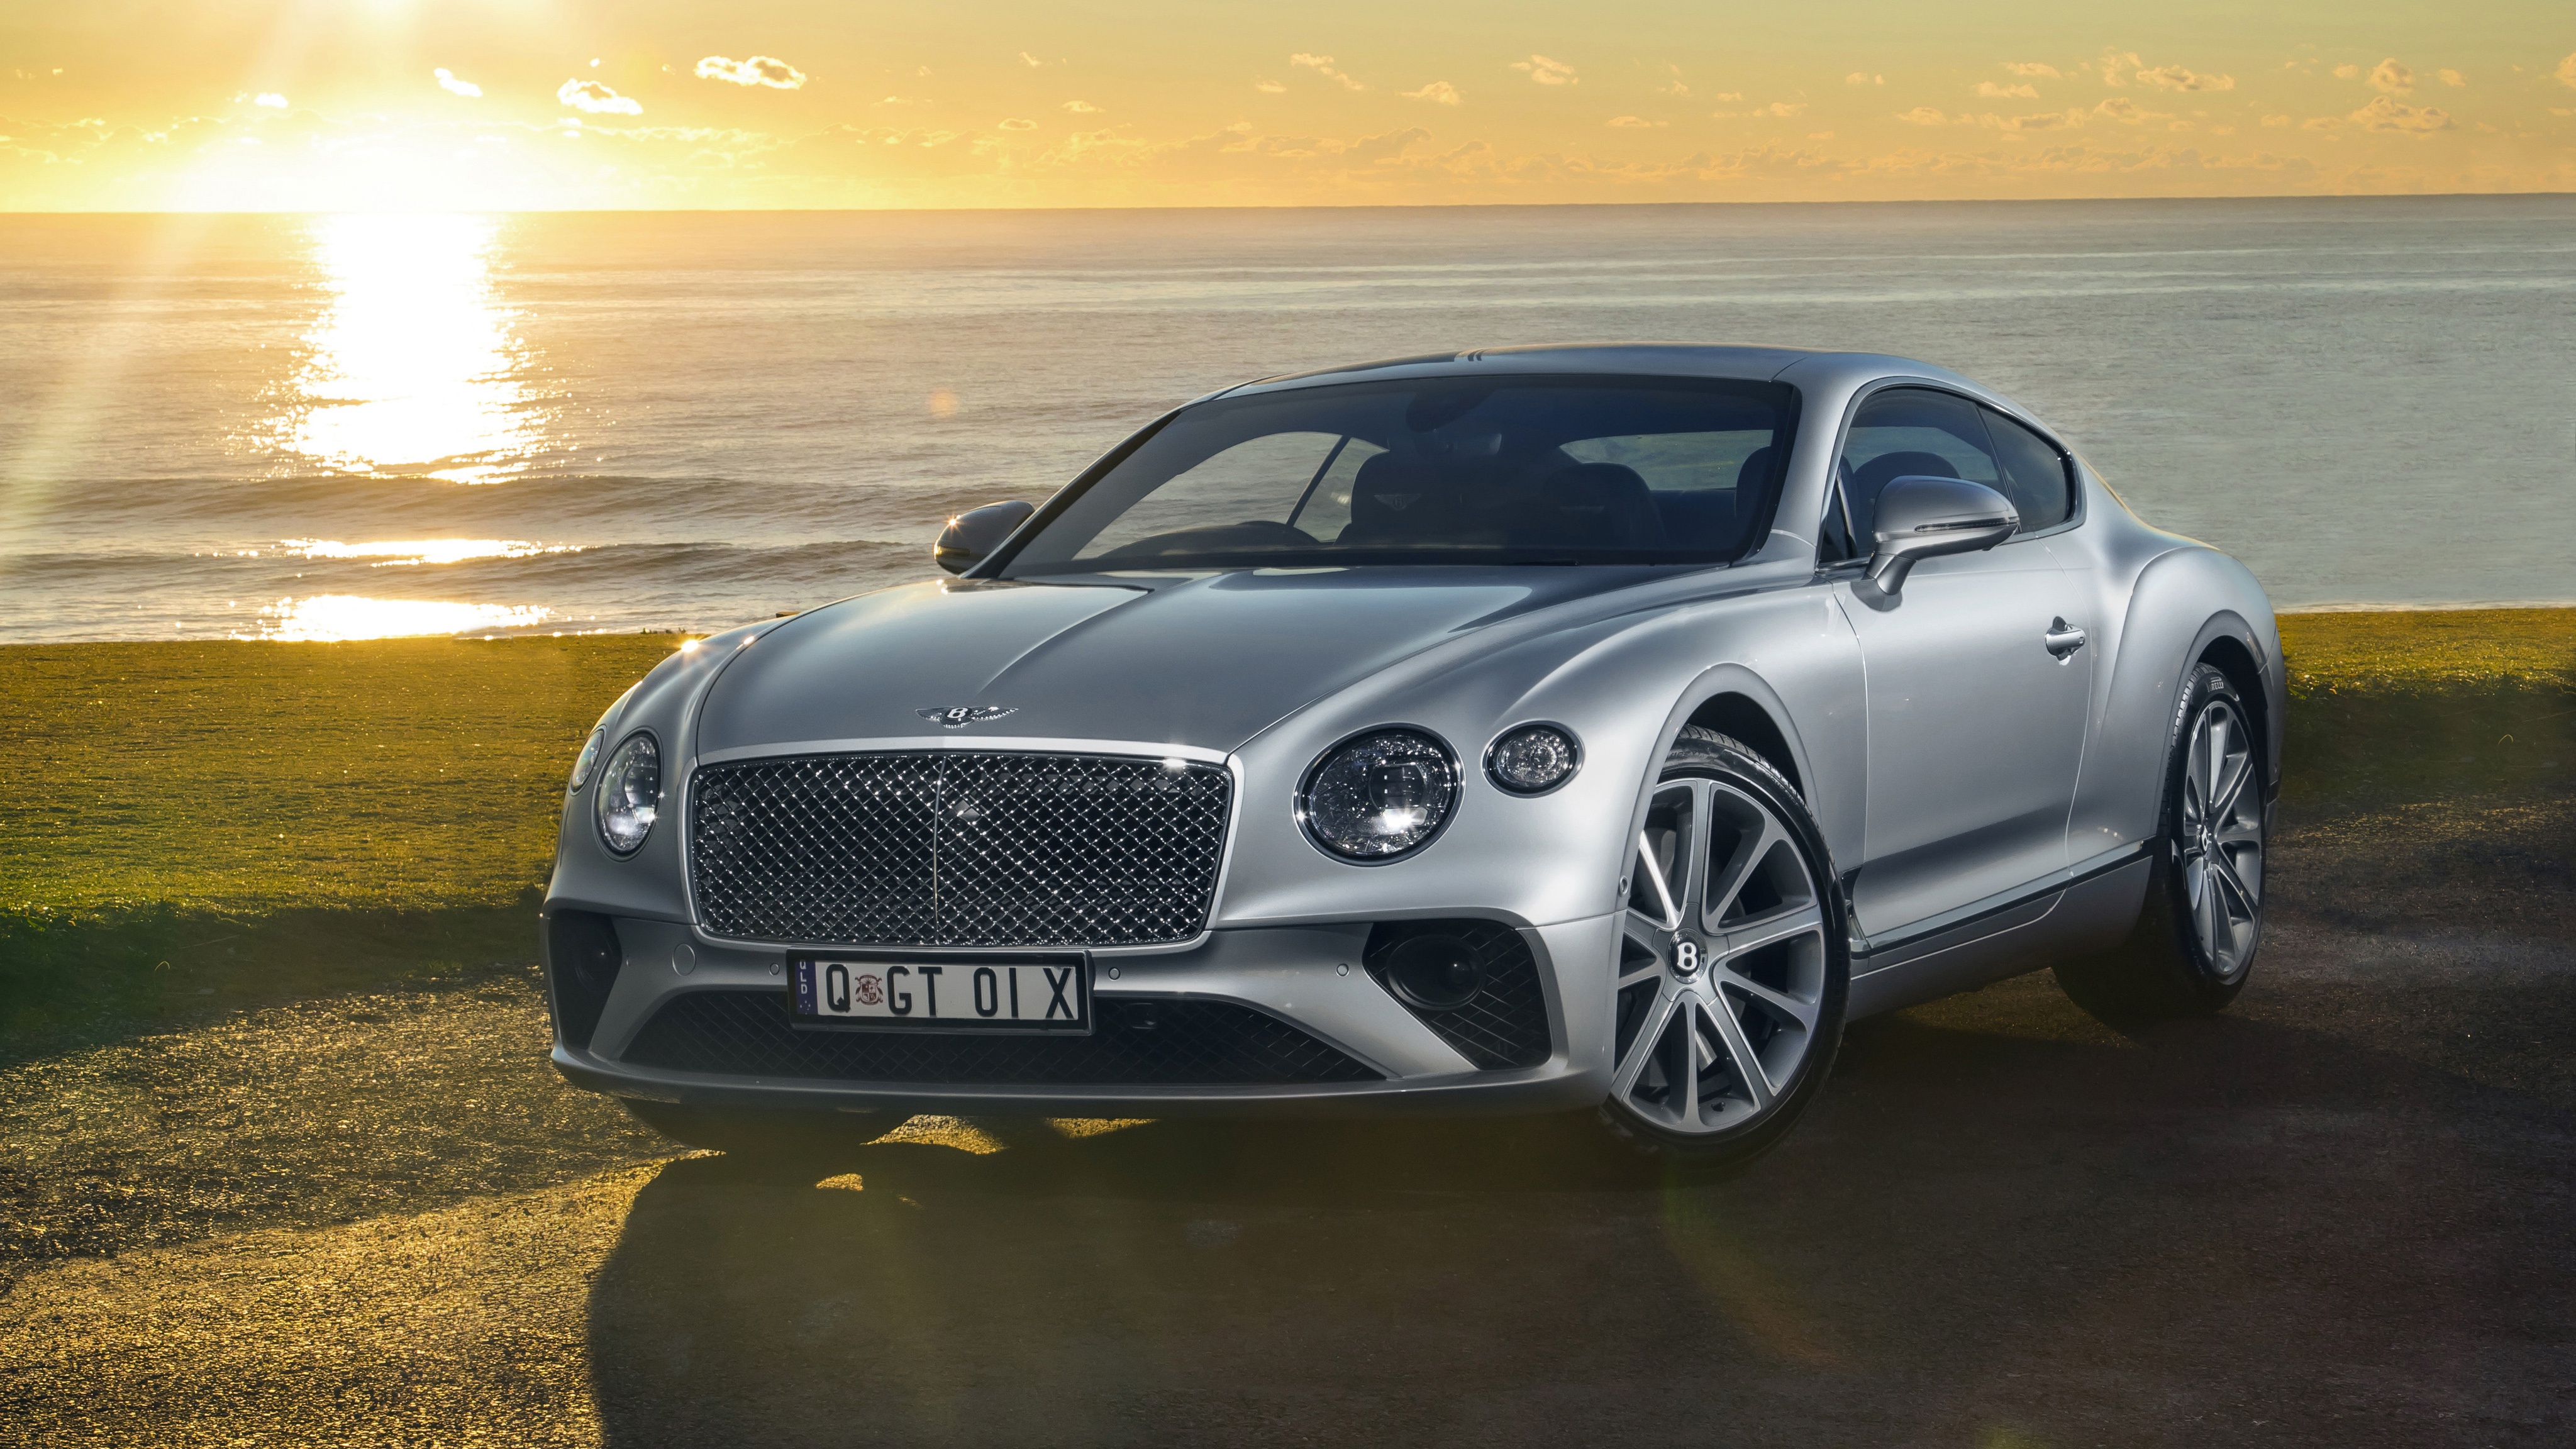 Baixe gratuitamente a imagem Bentley, Bentley Continental Gt, Veículos, Bentley Continental na área de trabalho do seu PC